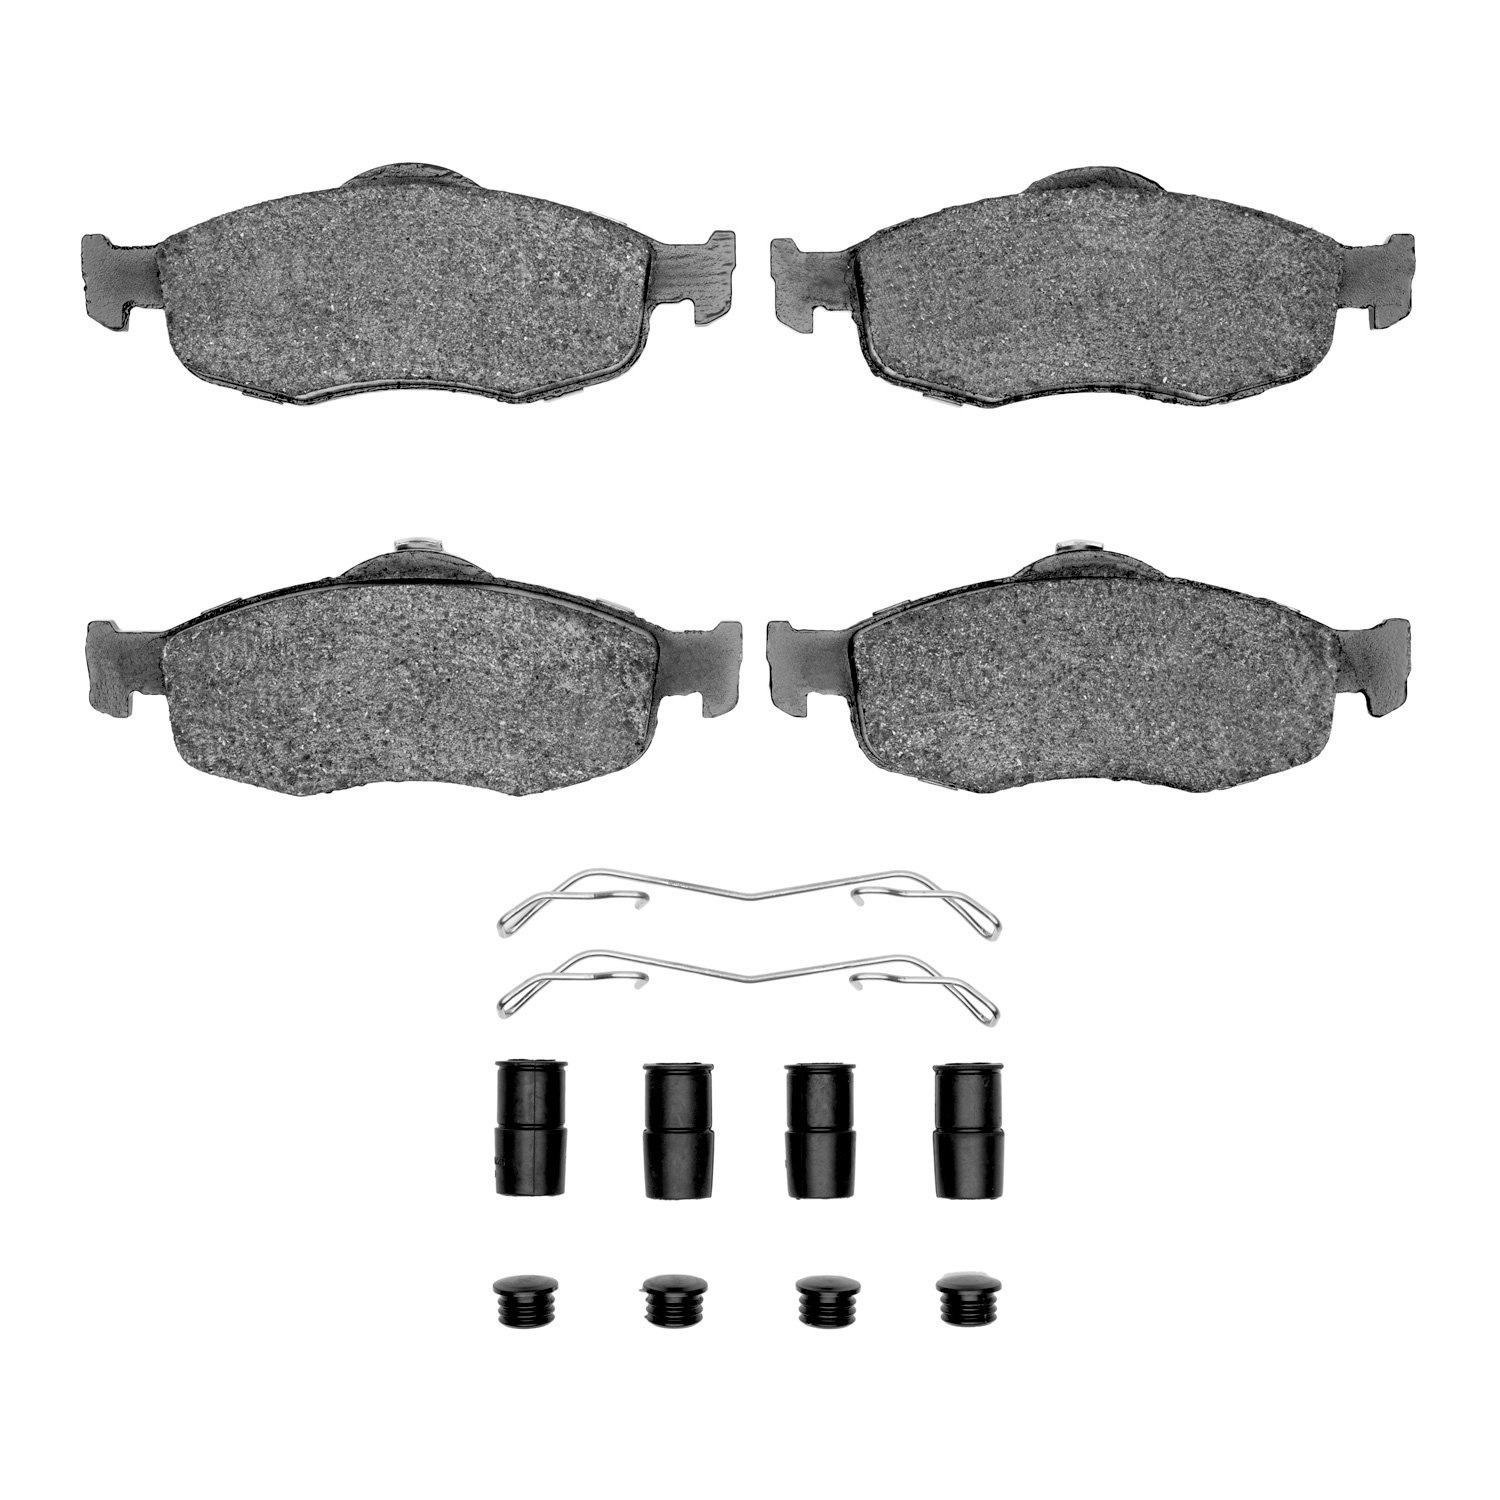 1551-0648-01 5000 Advanced Low-Metallic Brake Pads & Hardware Kit, 1995-2002 Ford/Lincoln/Mercury/Mazda, Position: Front